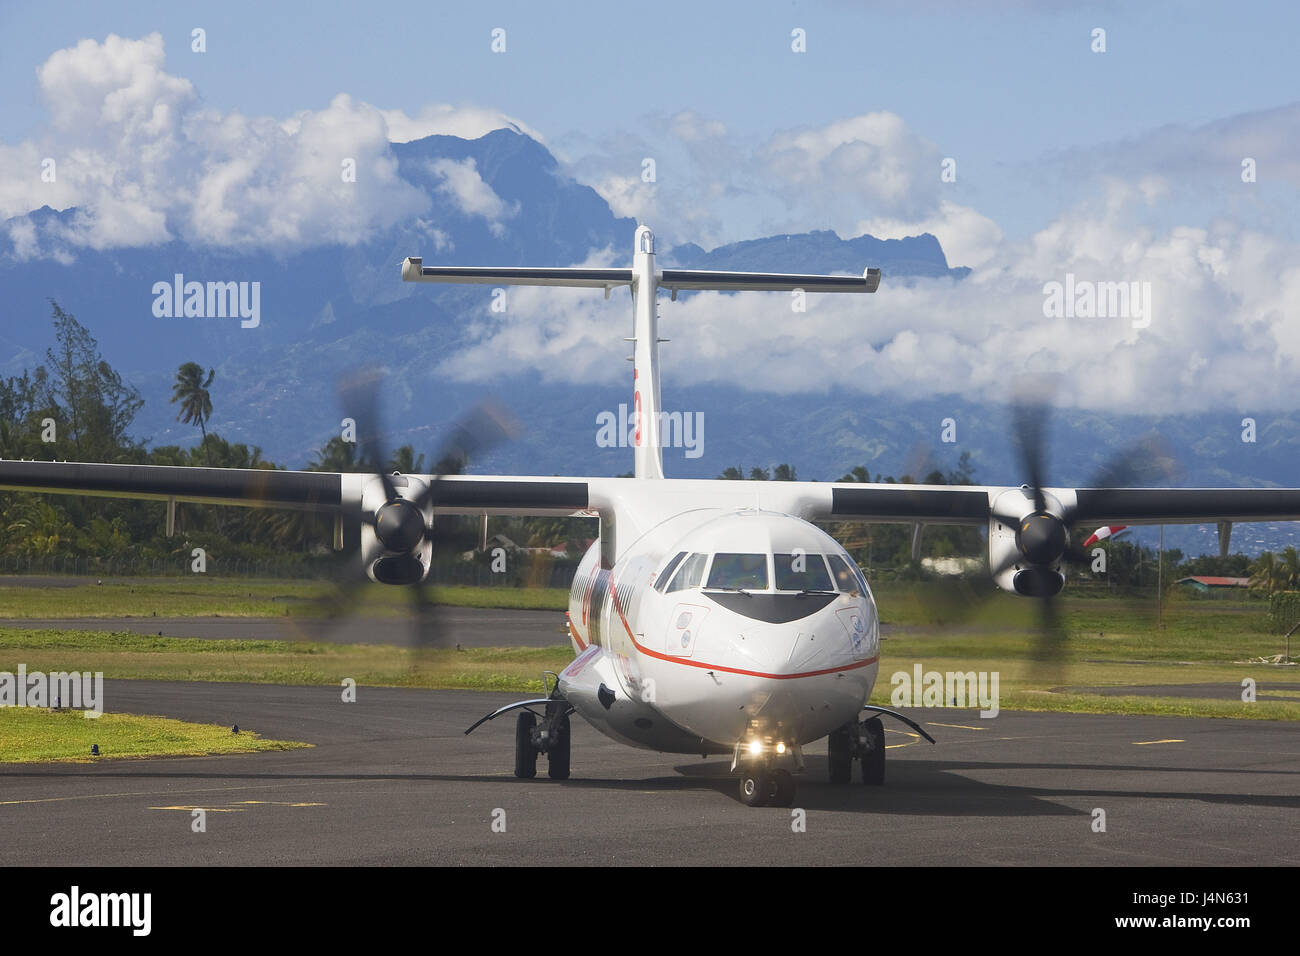 French Polynesia, Moorea, airport, landing field, airplane, Stock Photo